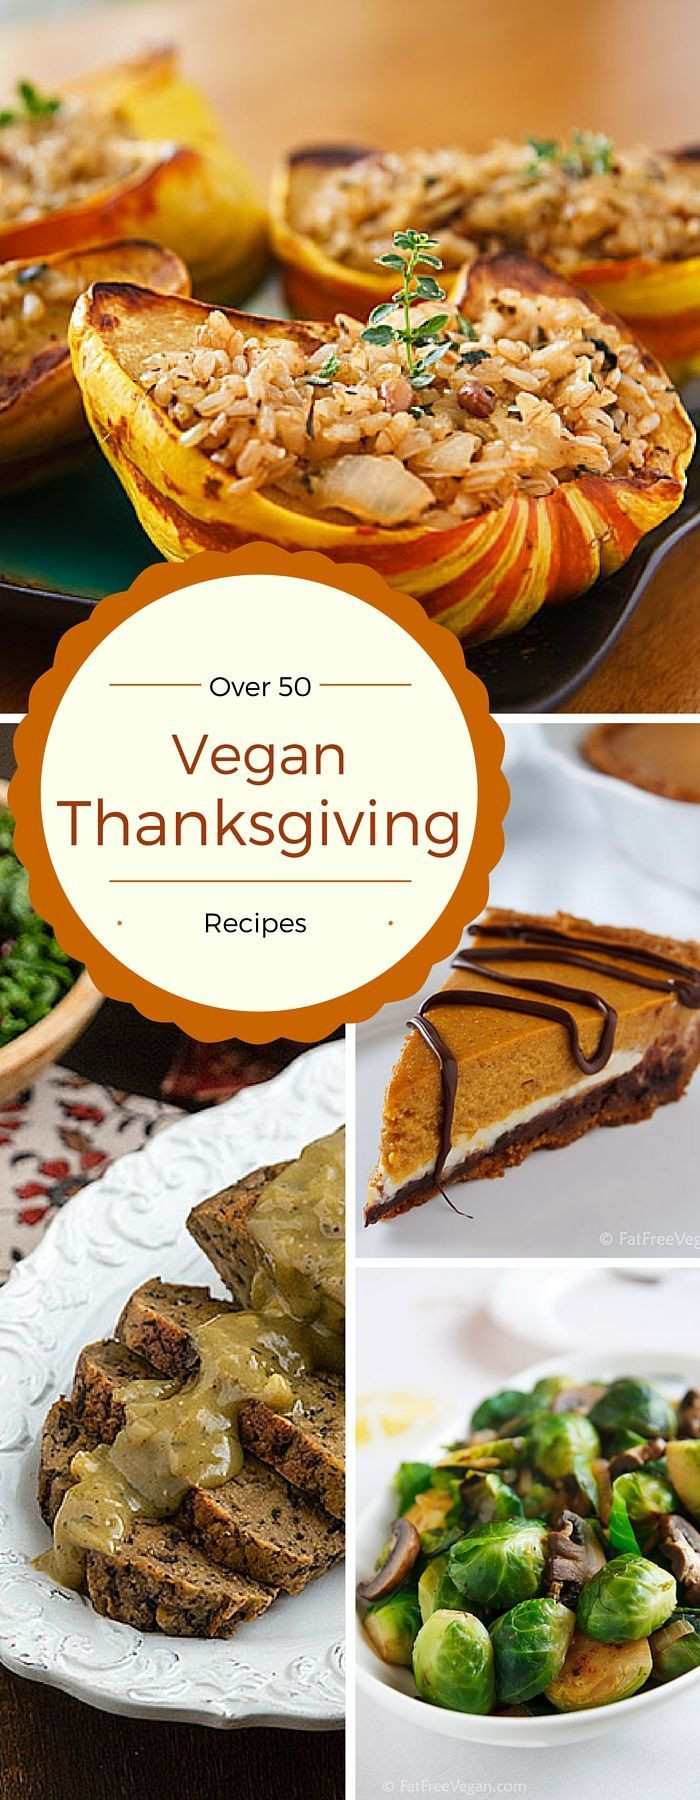 Vegetarian Recipes For Thanksgiving
 25 best ideas about Vegan Thanksgiving on Pinterest